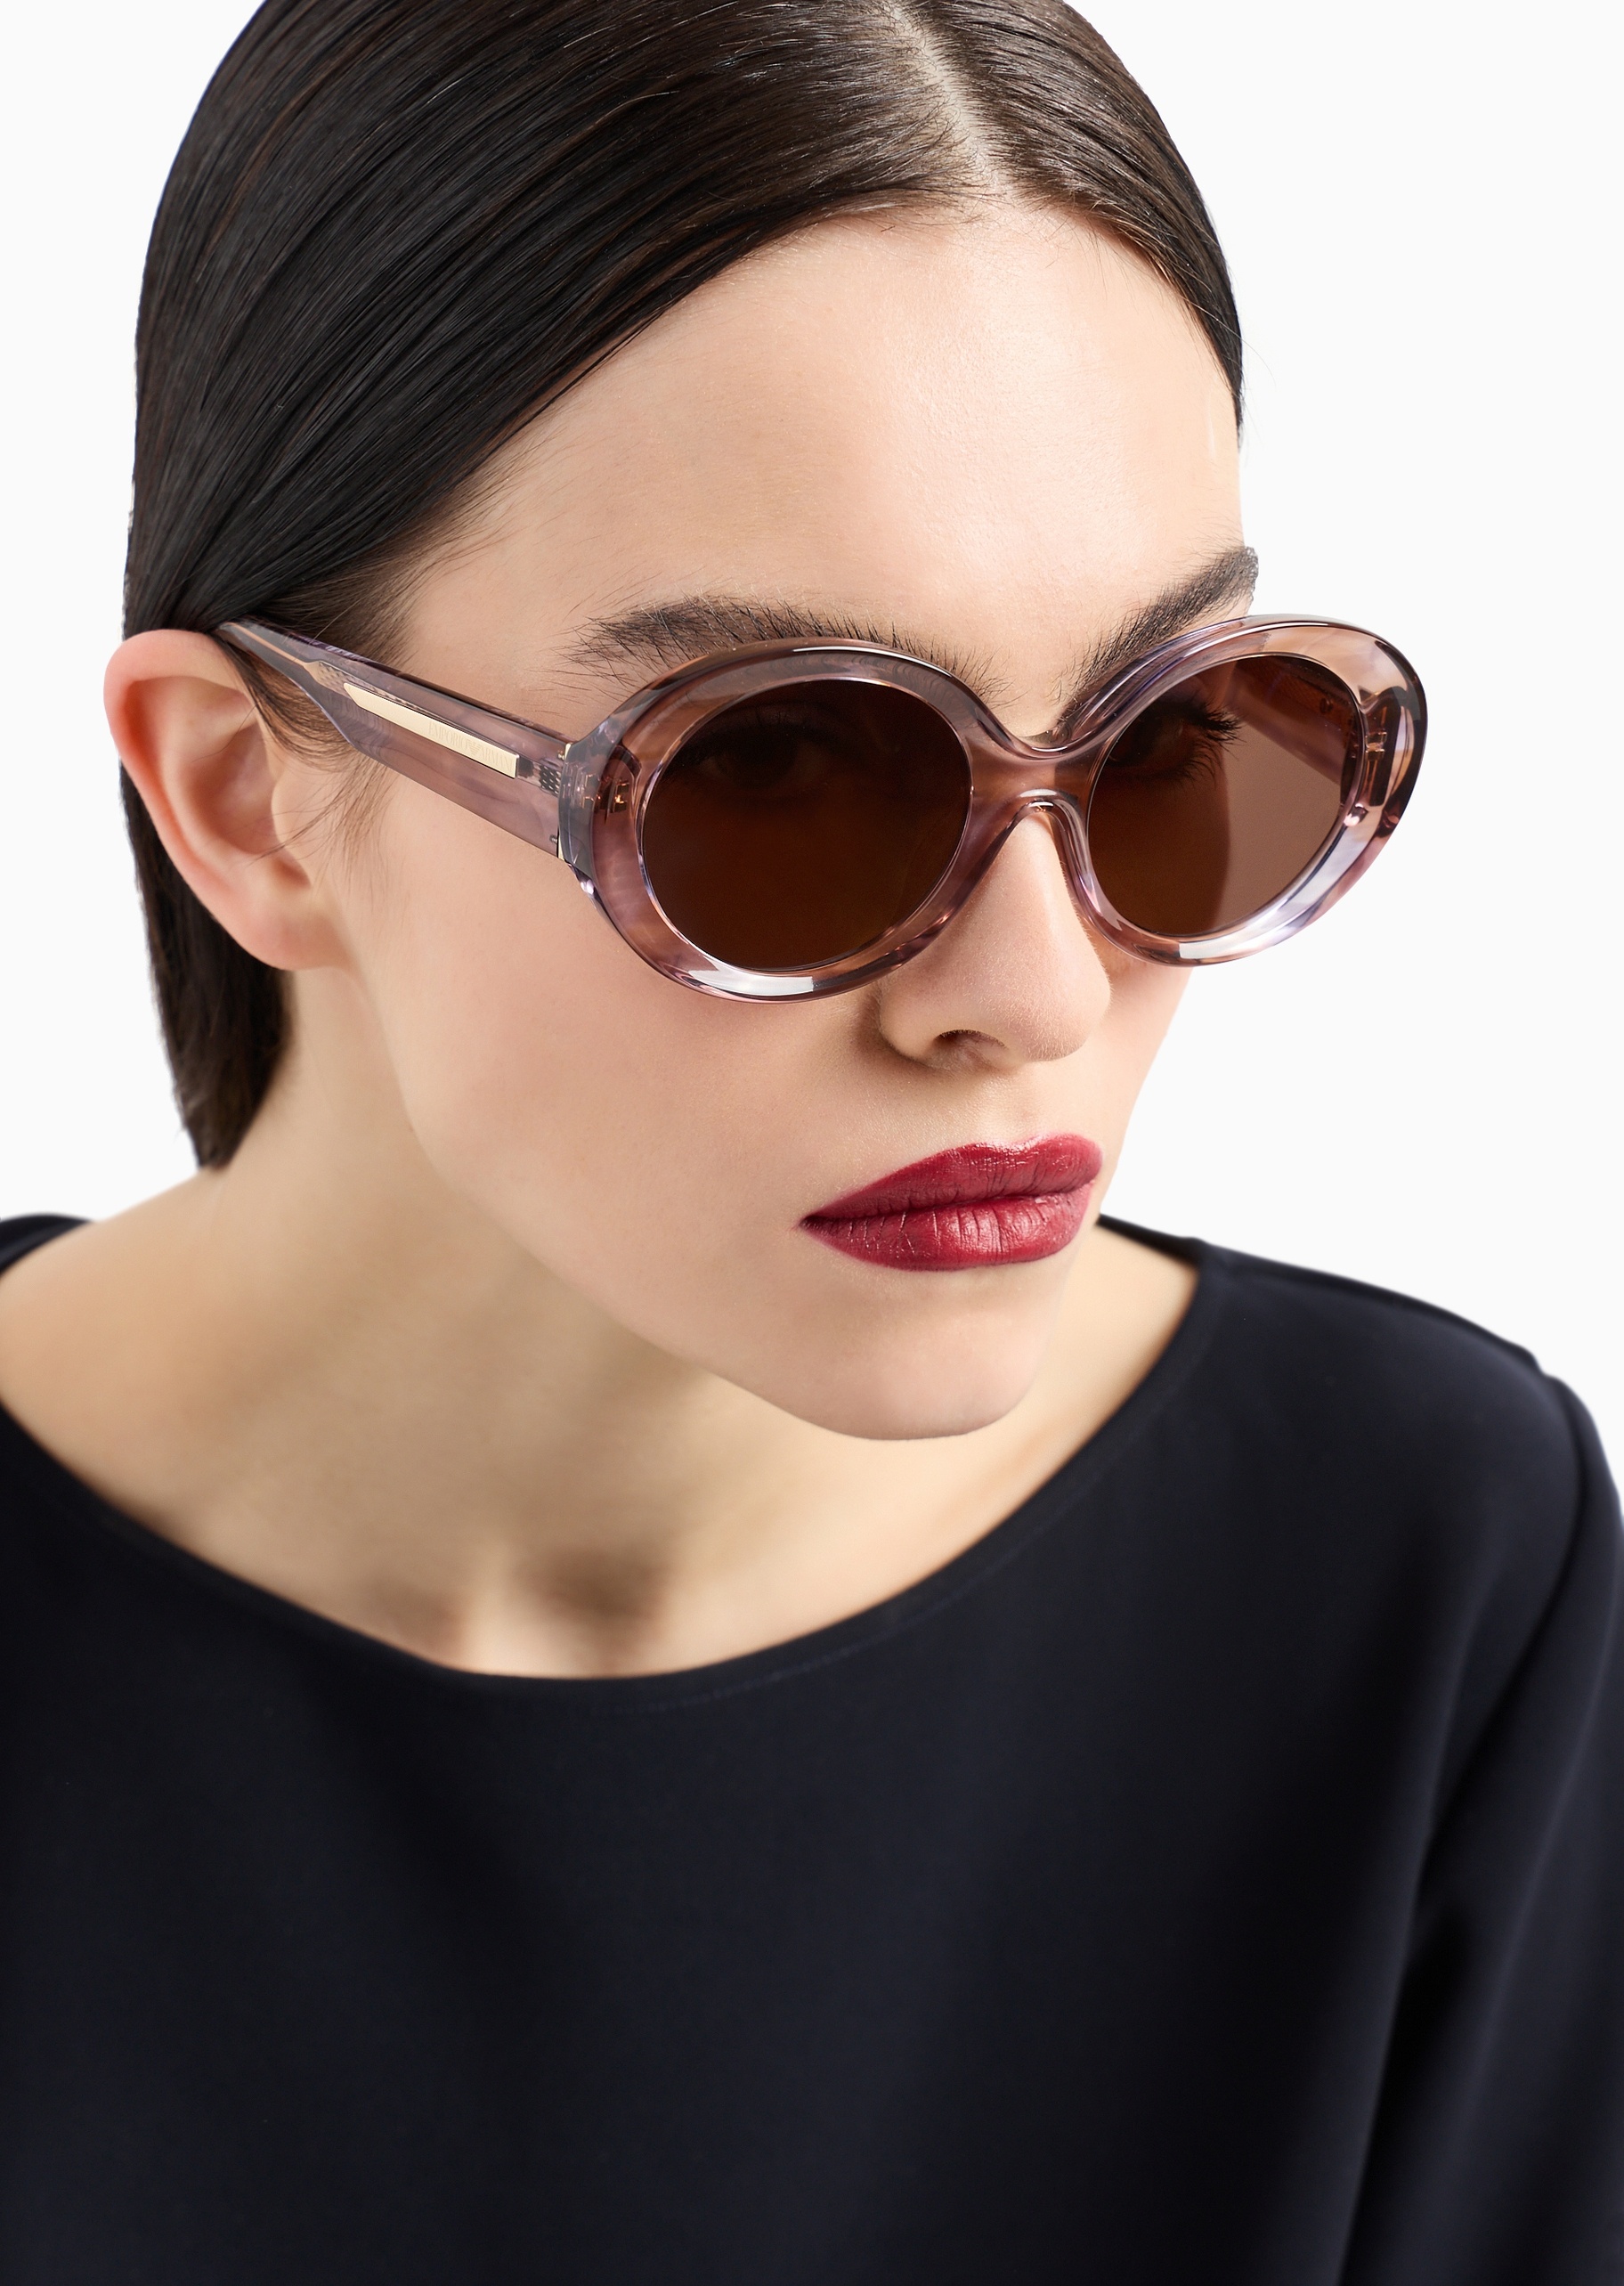 Emporio Armani 女士椭圆形粗边框复古潮流太阳眼镜